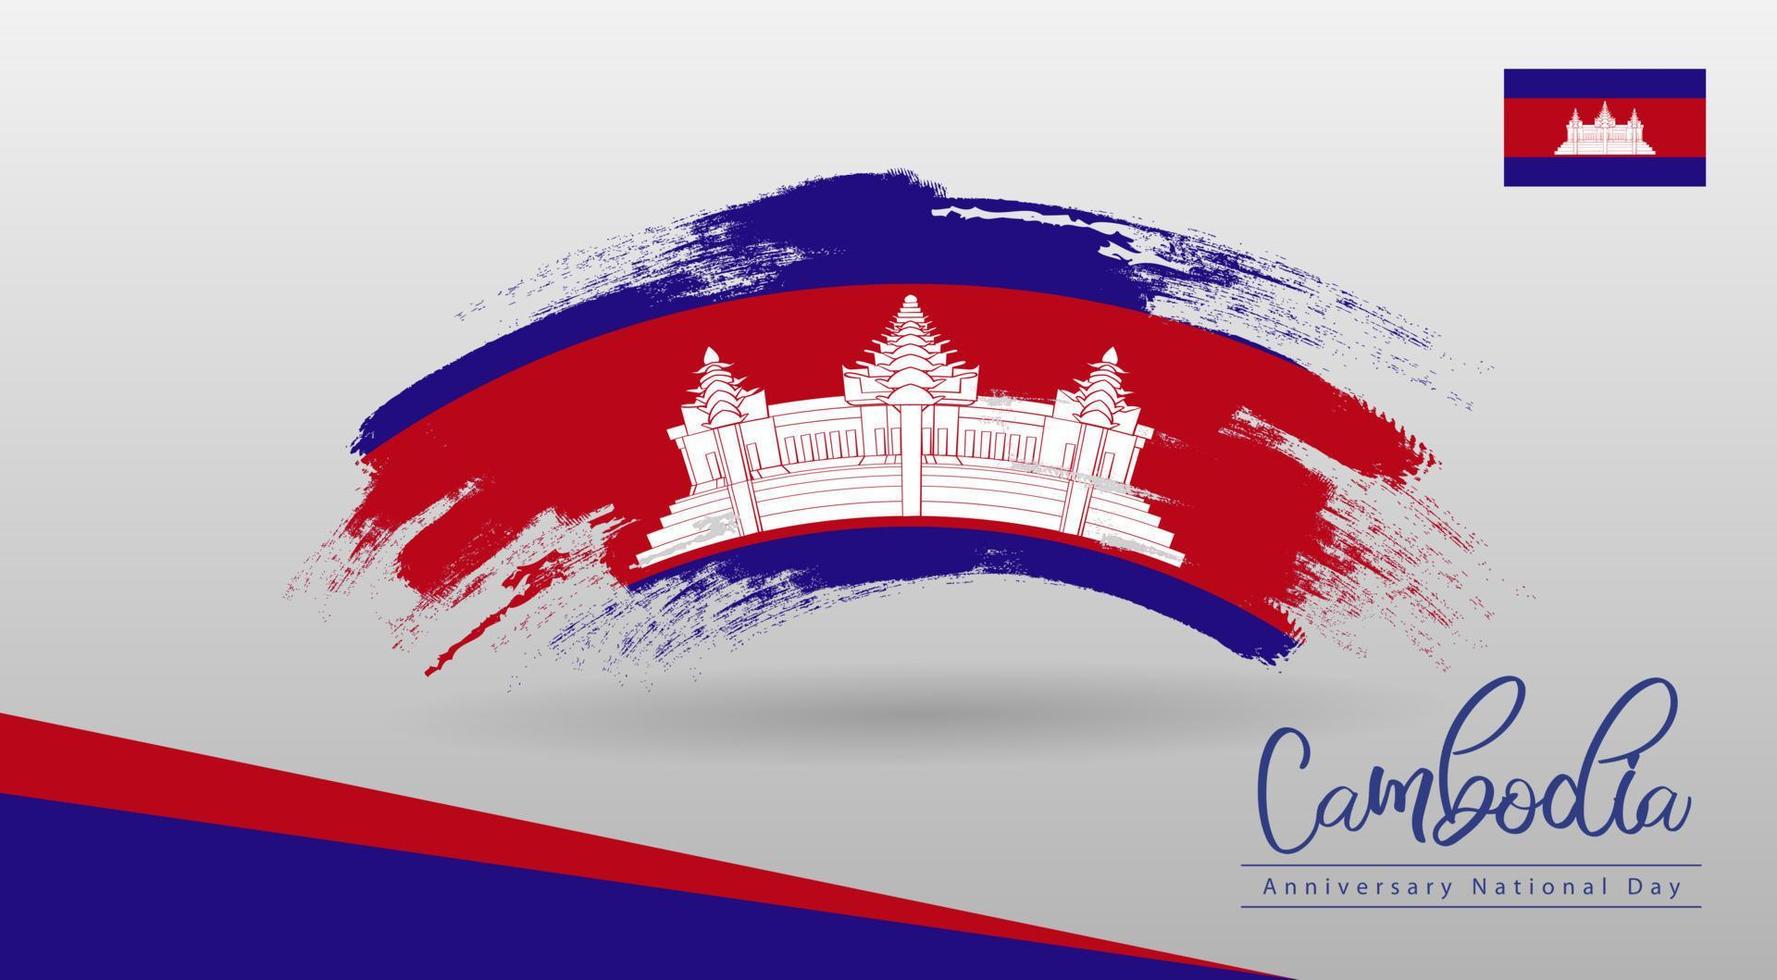 glücklicher nationaltag kambodscha. Banner, Grußkarte, Flyer-Design. Poster-Template-Design vektor